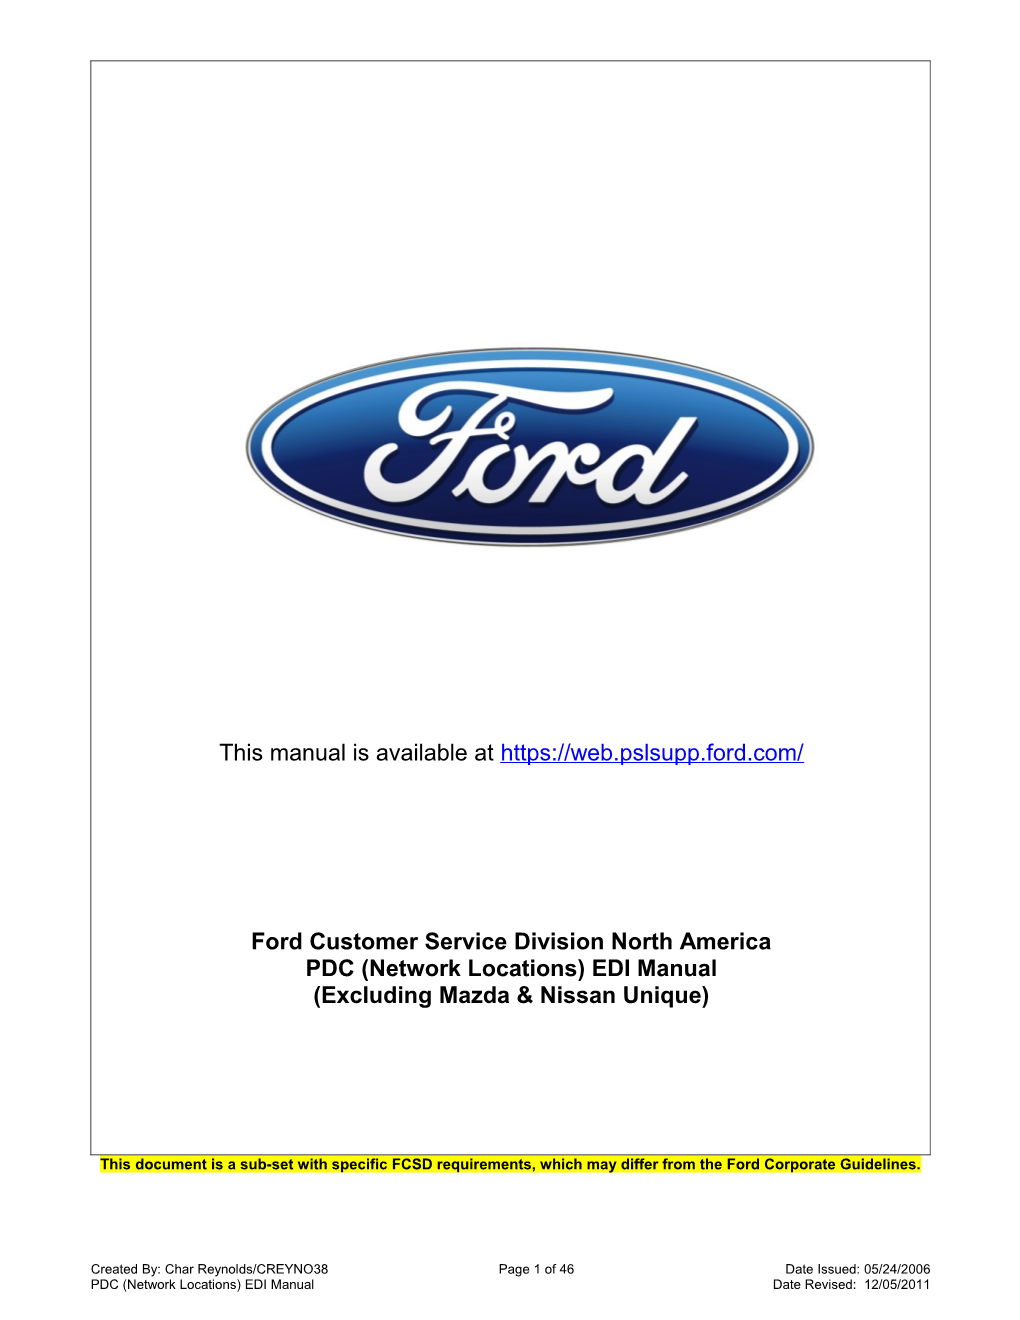 Ford Customer Service Division North America